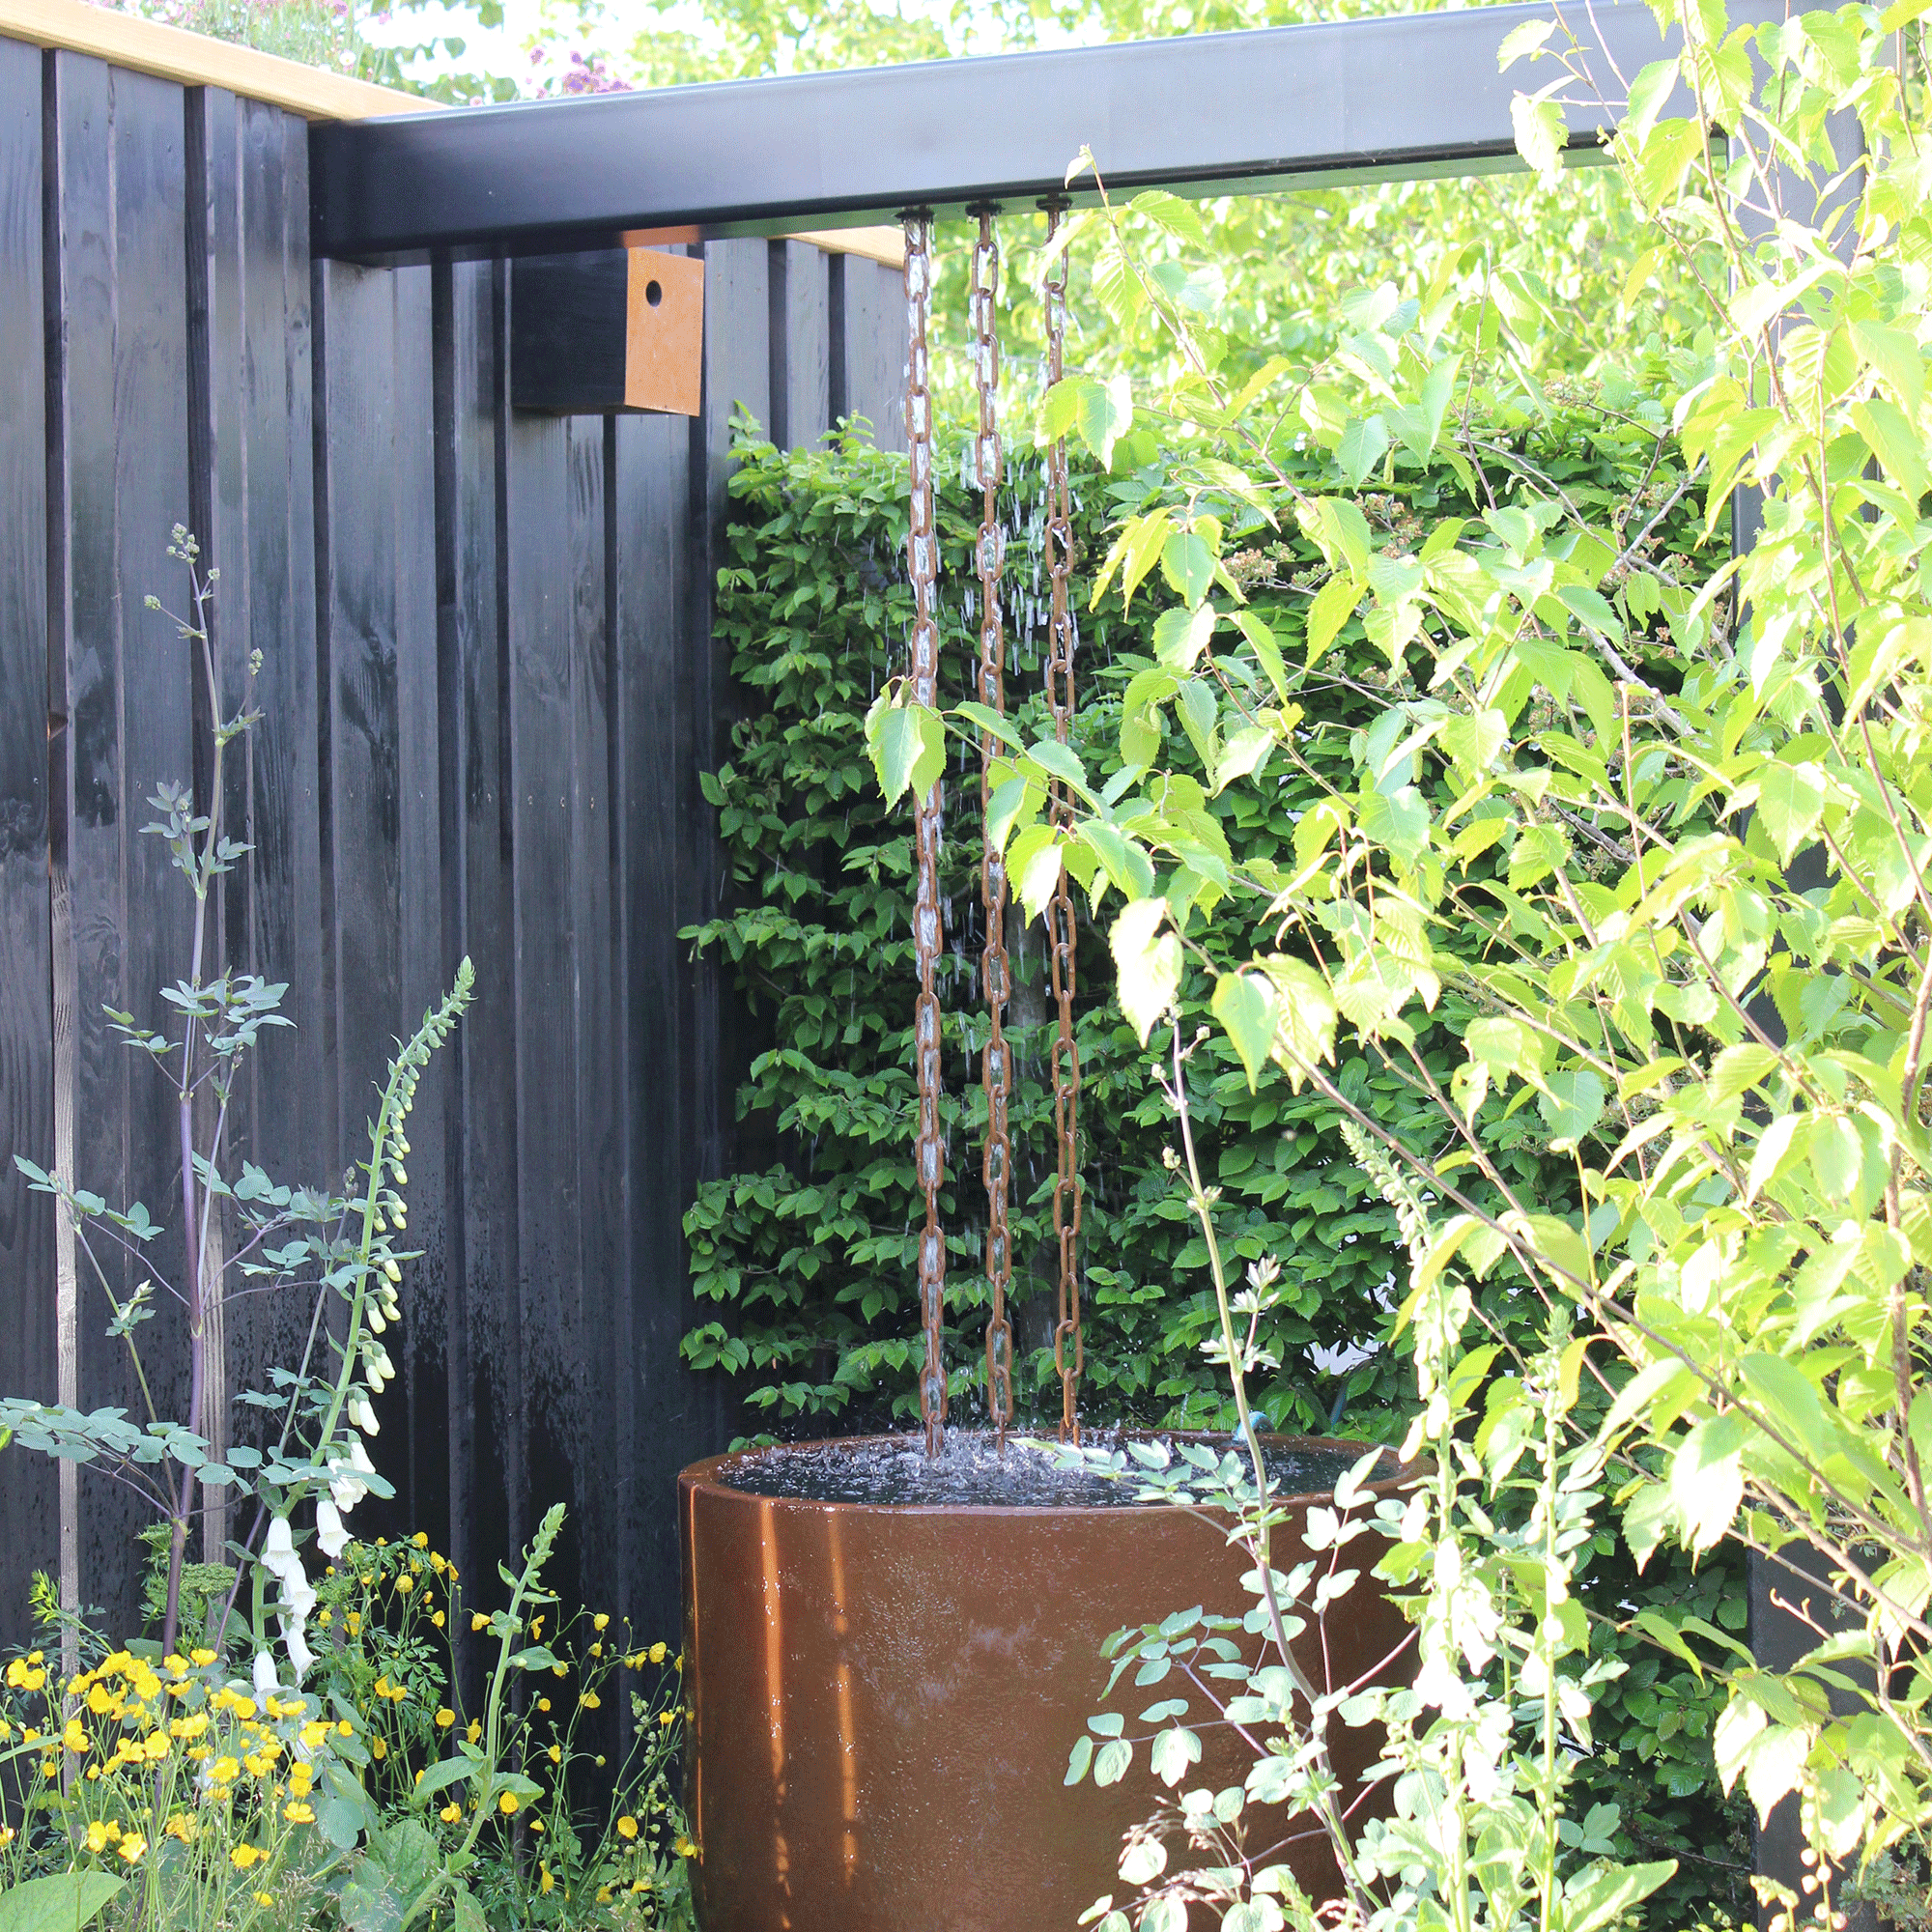 Chelsea garden with bird boxes built into wall